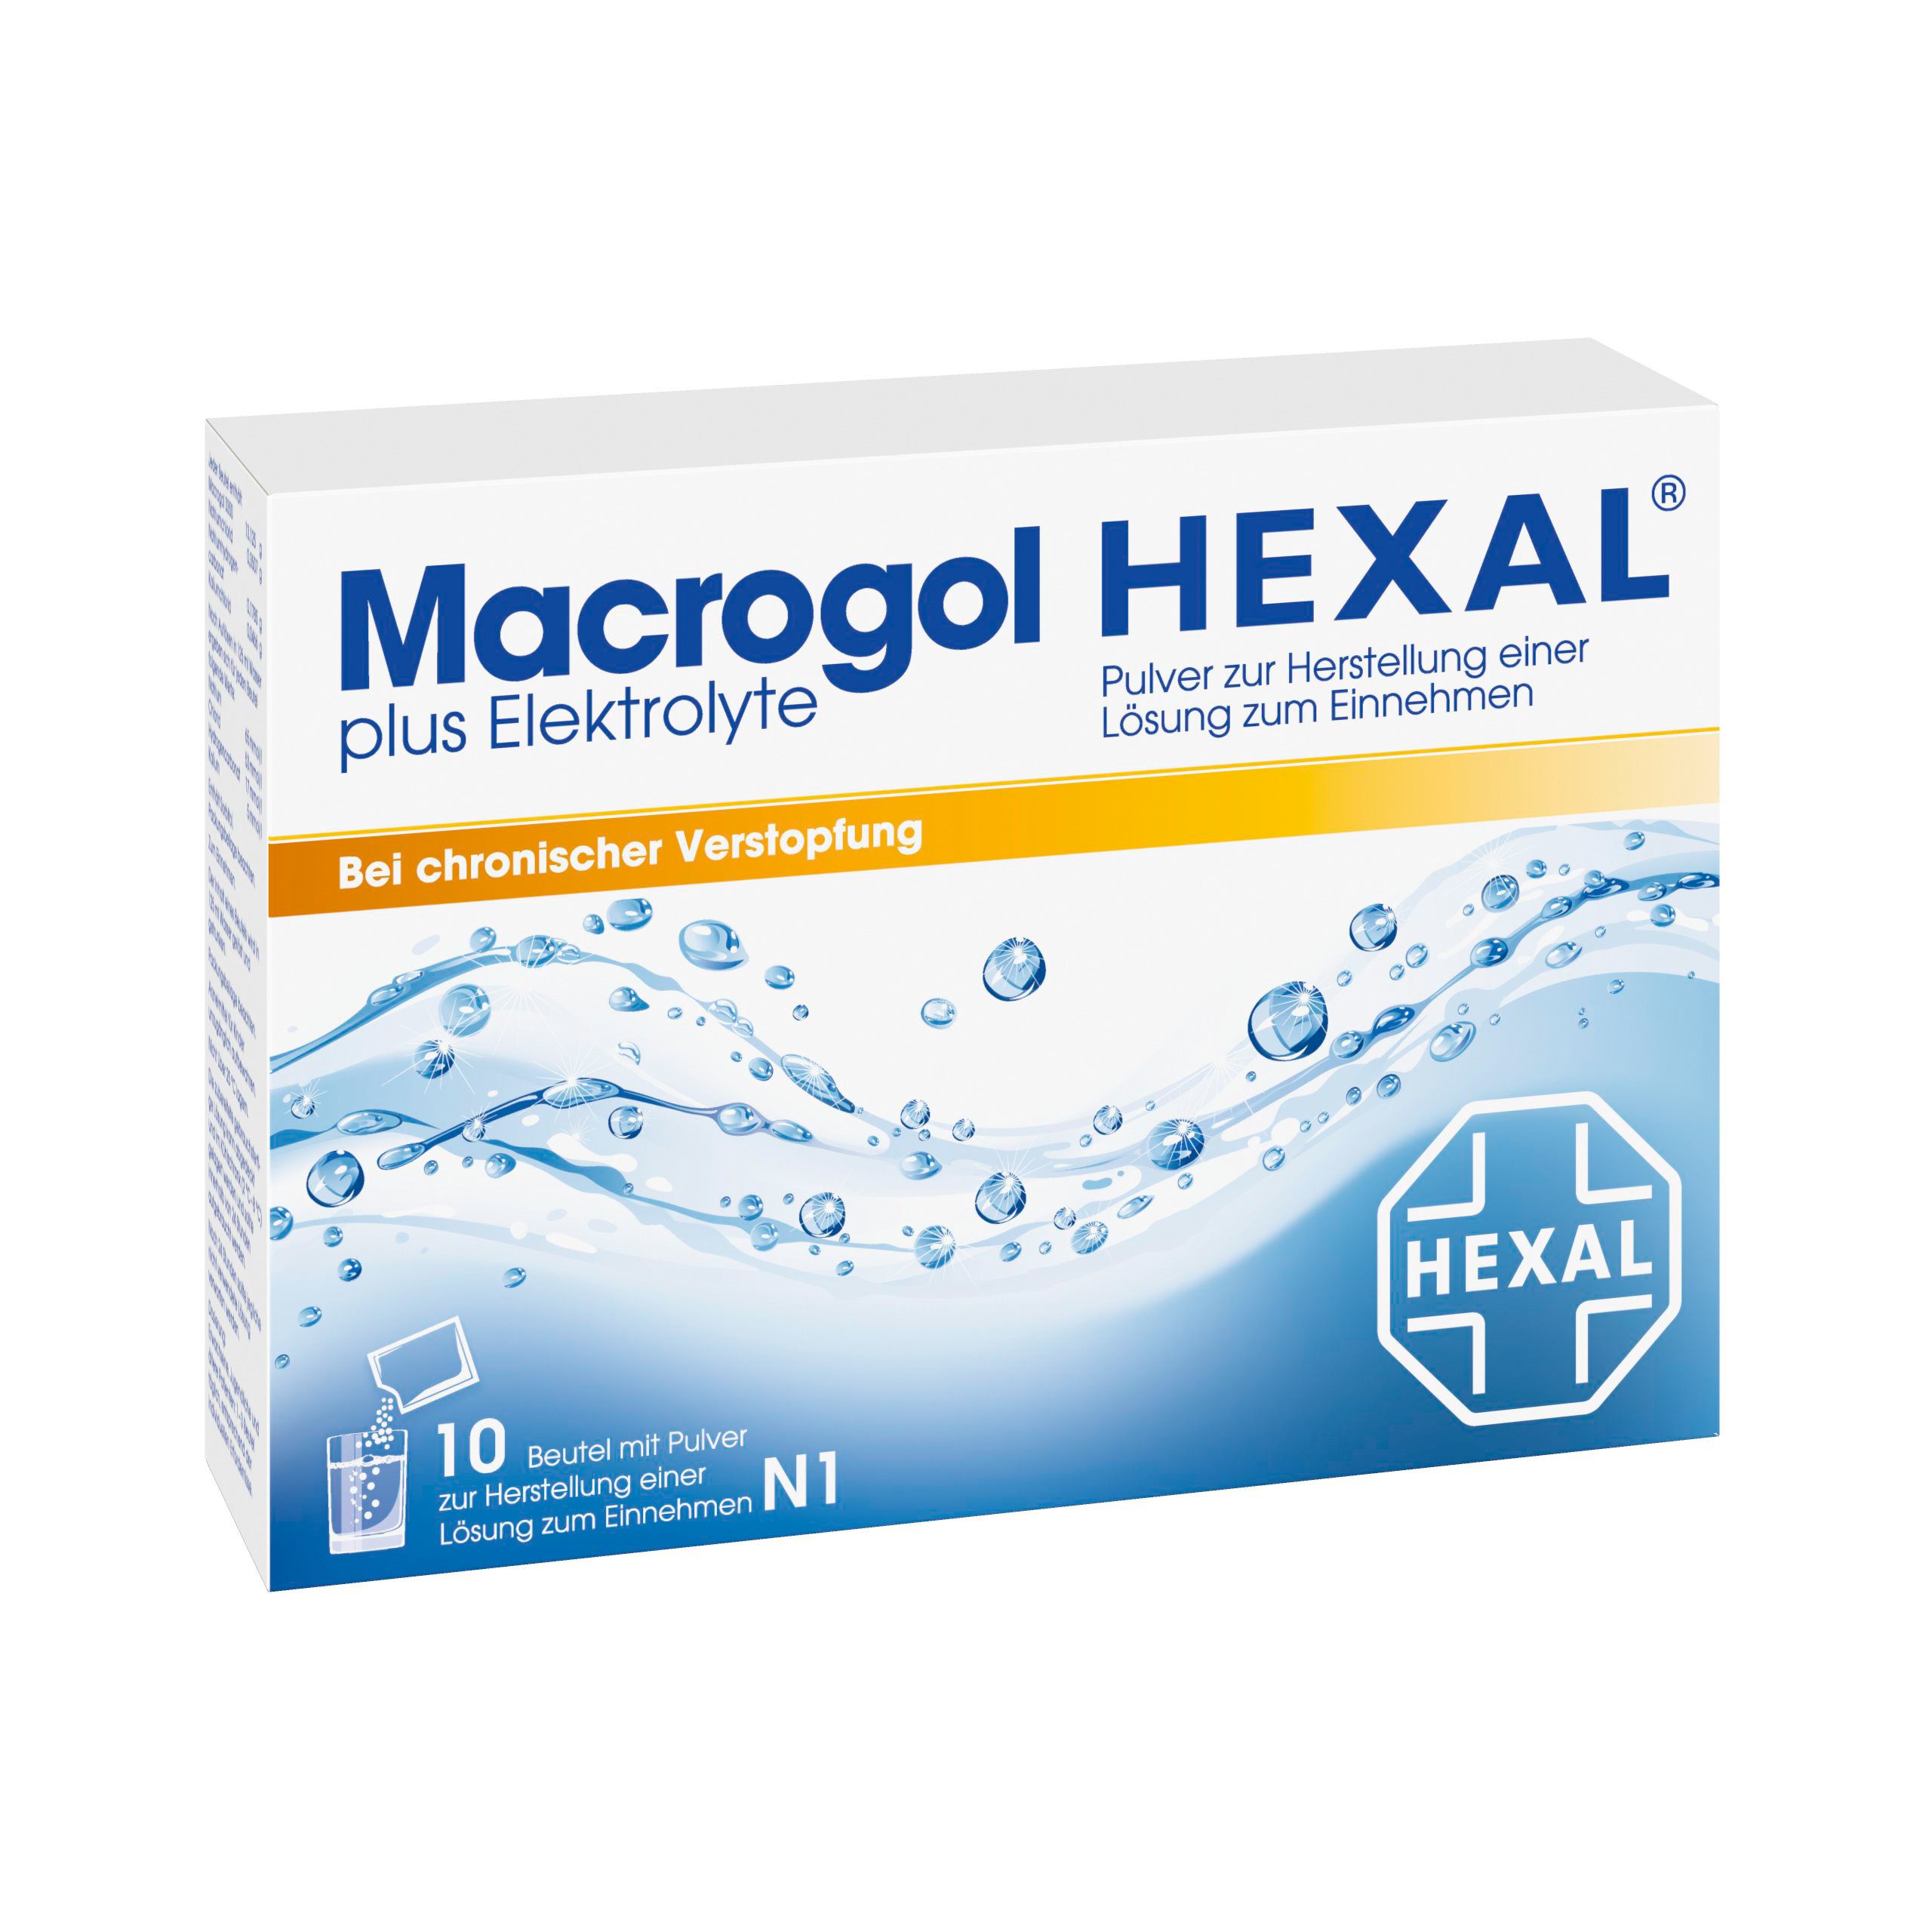 Macrogol HEXAL® plus Elektrolyte